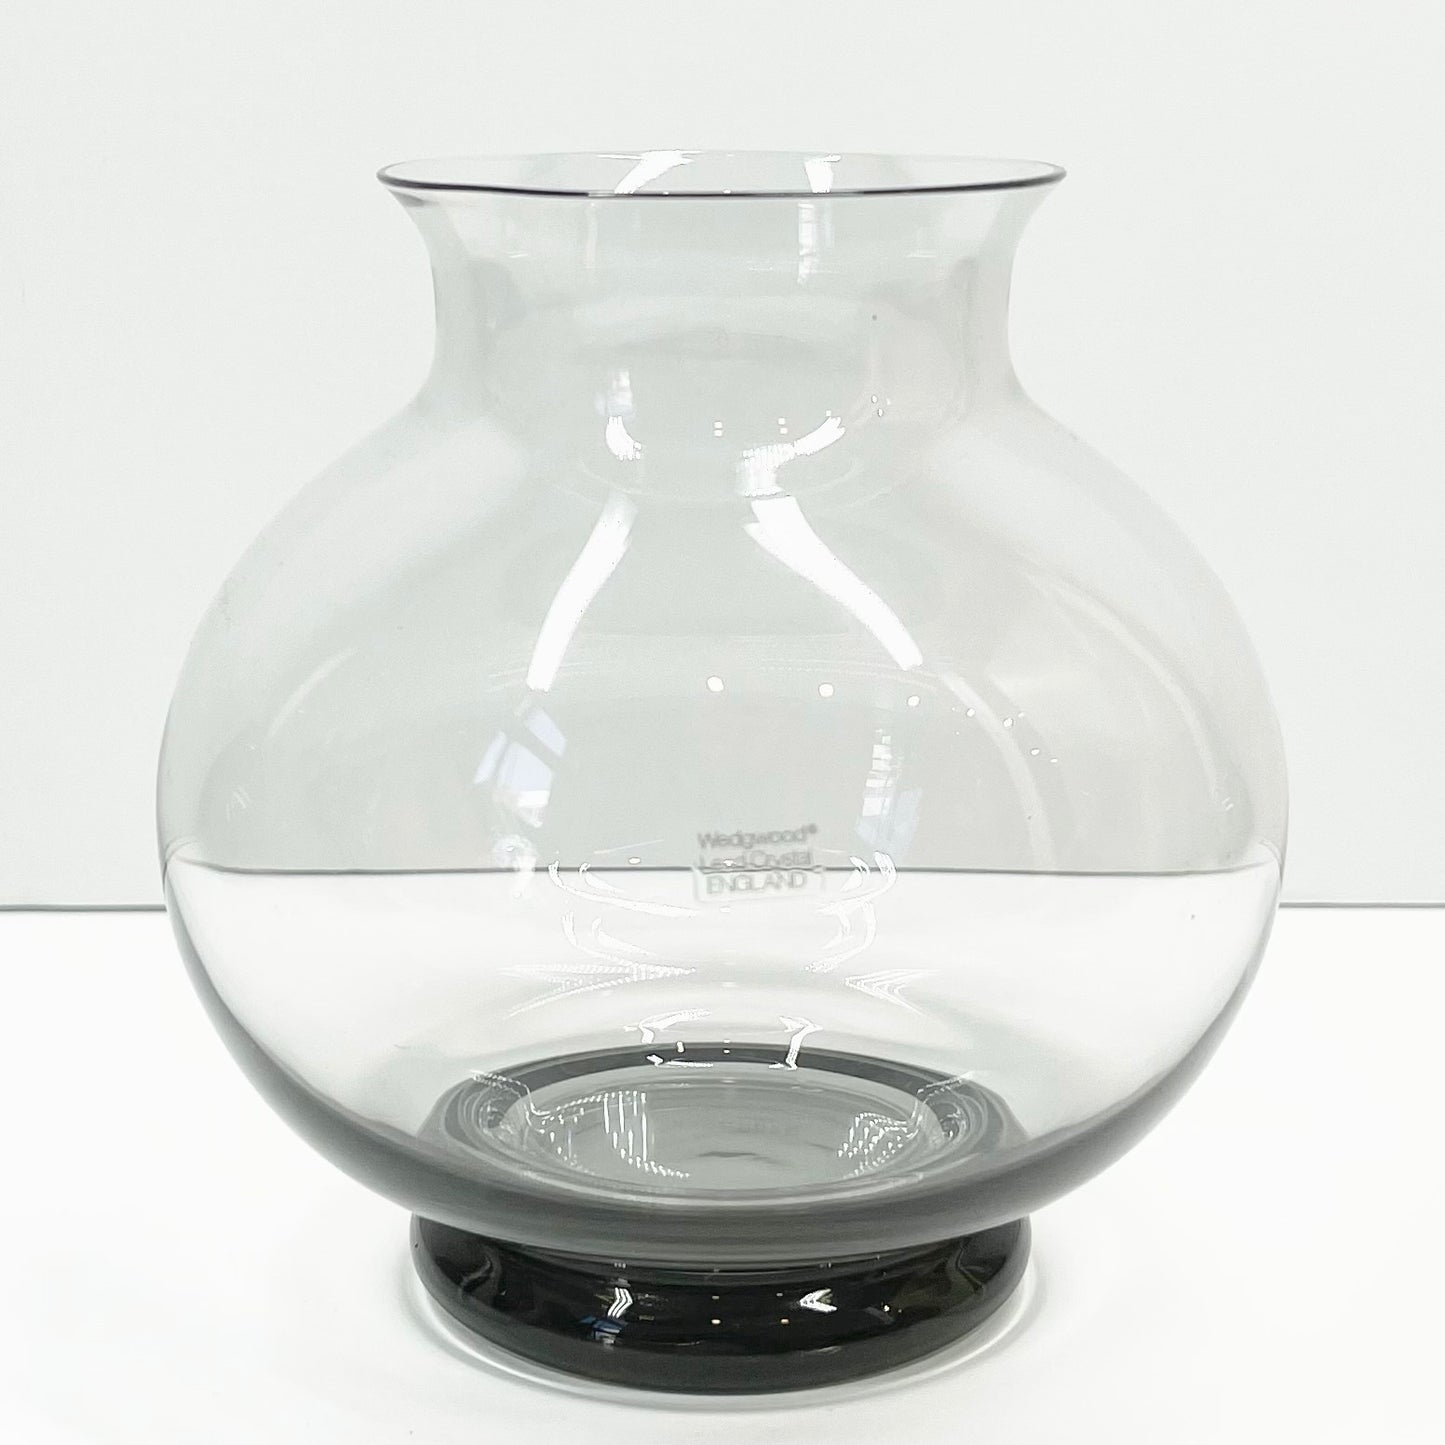 Vintage Wedgewood grey glass vase/candle lantern